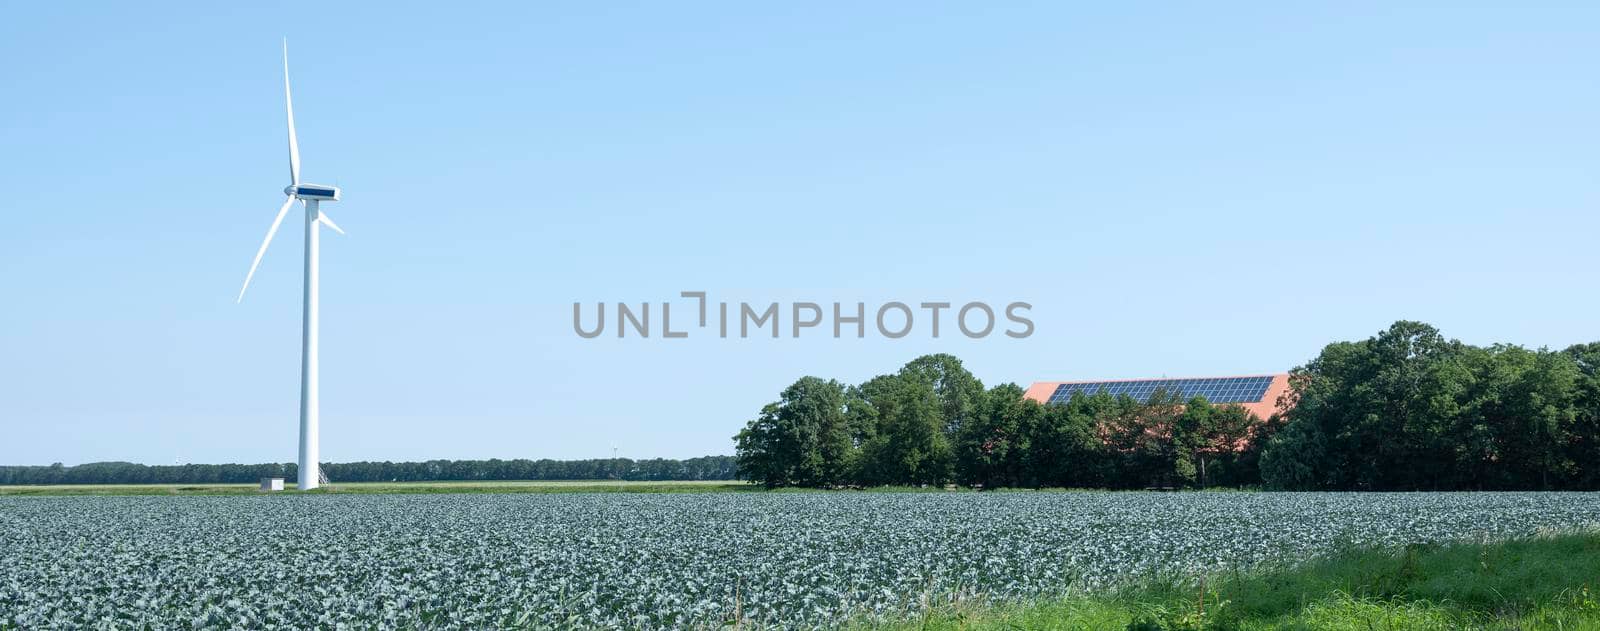 red cabbage field with wind turbine and farm in wieringermeer by ahavelaar